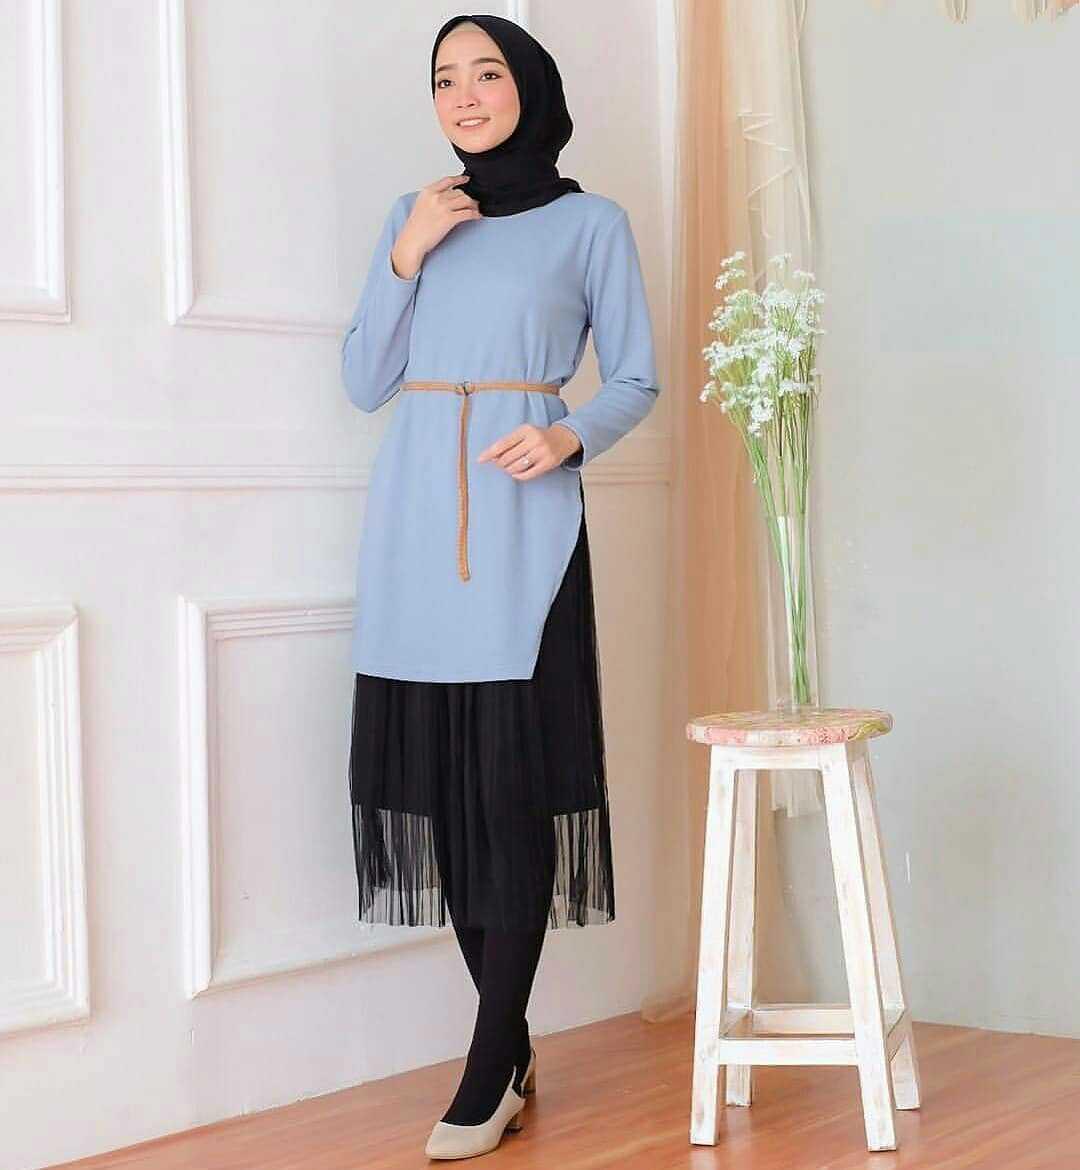 Baju Muslim Modern SARE SARE TUNIK Wolfis Mix Tile Baju Tunik Blouse Atasan Modern Terbaru Fashion Lengan Panjang Wanita Baju Kerja Best Seller Pakaian Perempuan Casual Hijab Trendy Muslimah Simple Top Termurah Kekinian Modis Modern Terbaru 2019